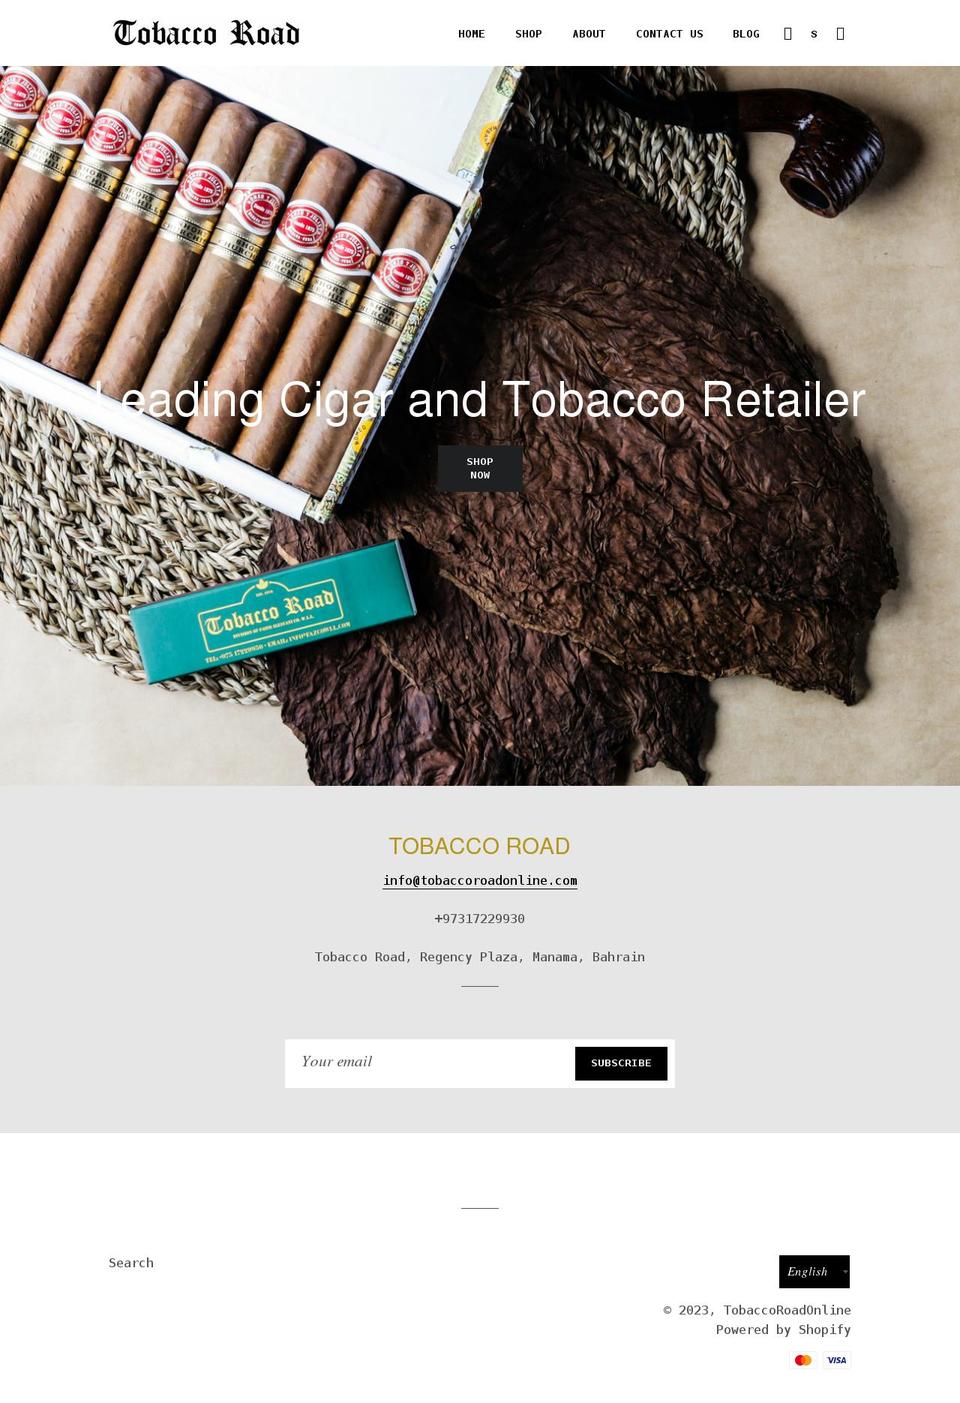 tobaccoroadonline.com shopify website screenshot